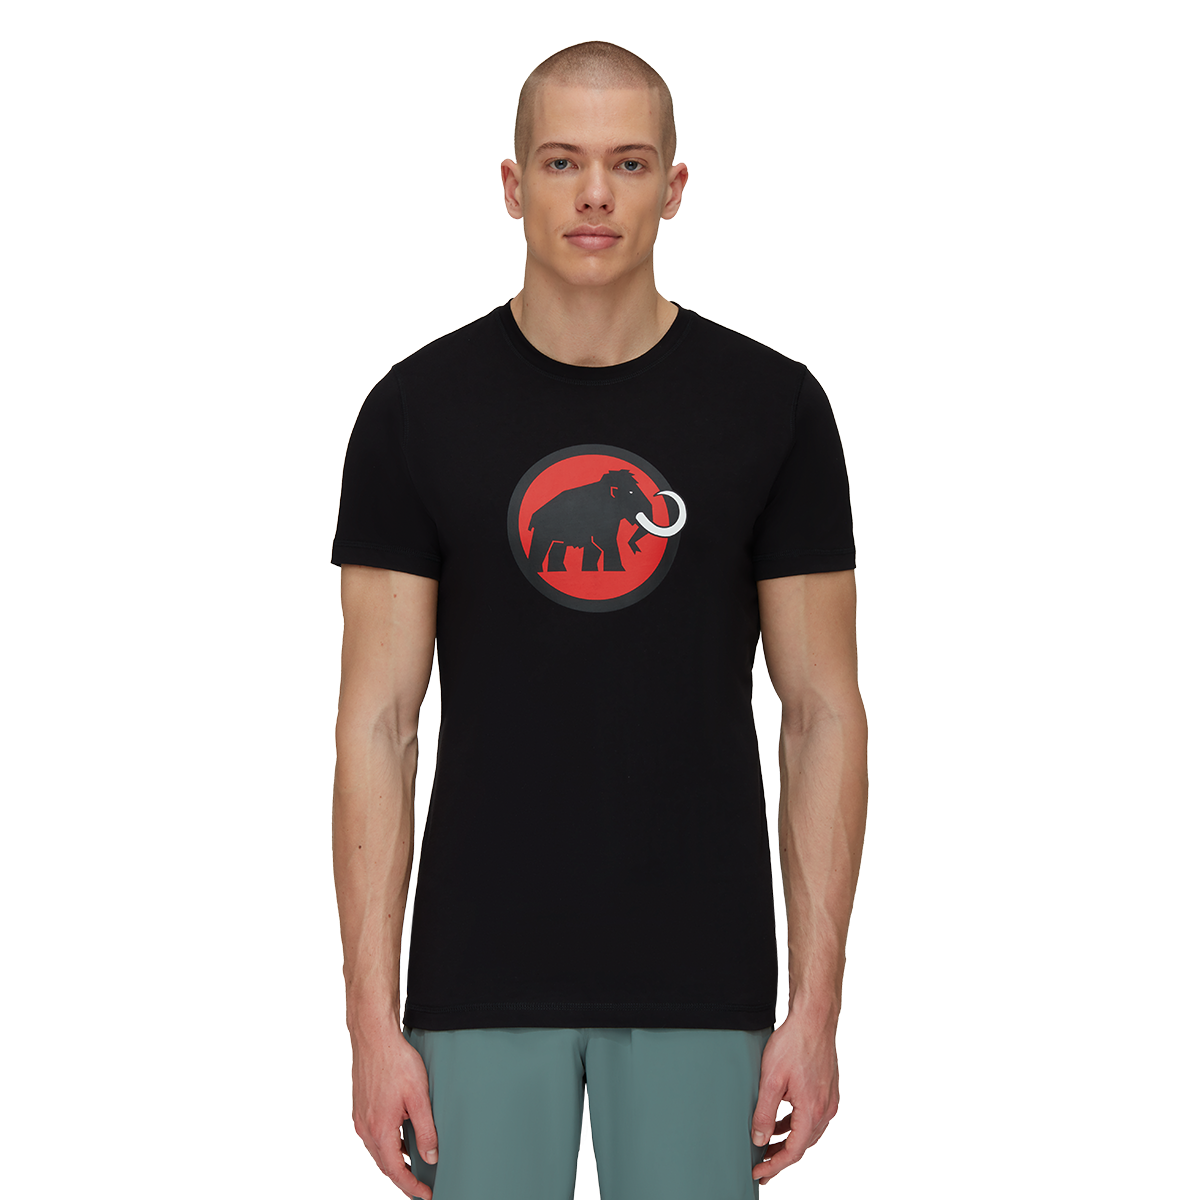 Mammut Core T-Shirt Men Classic